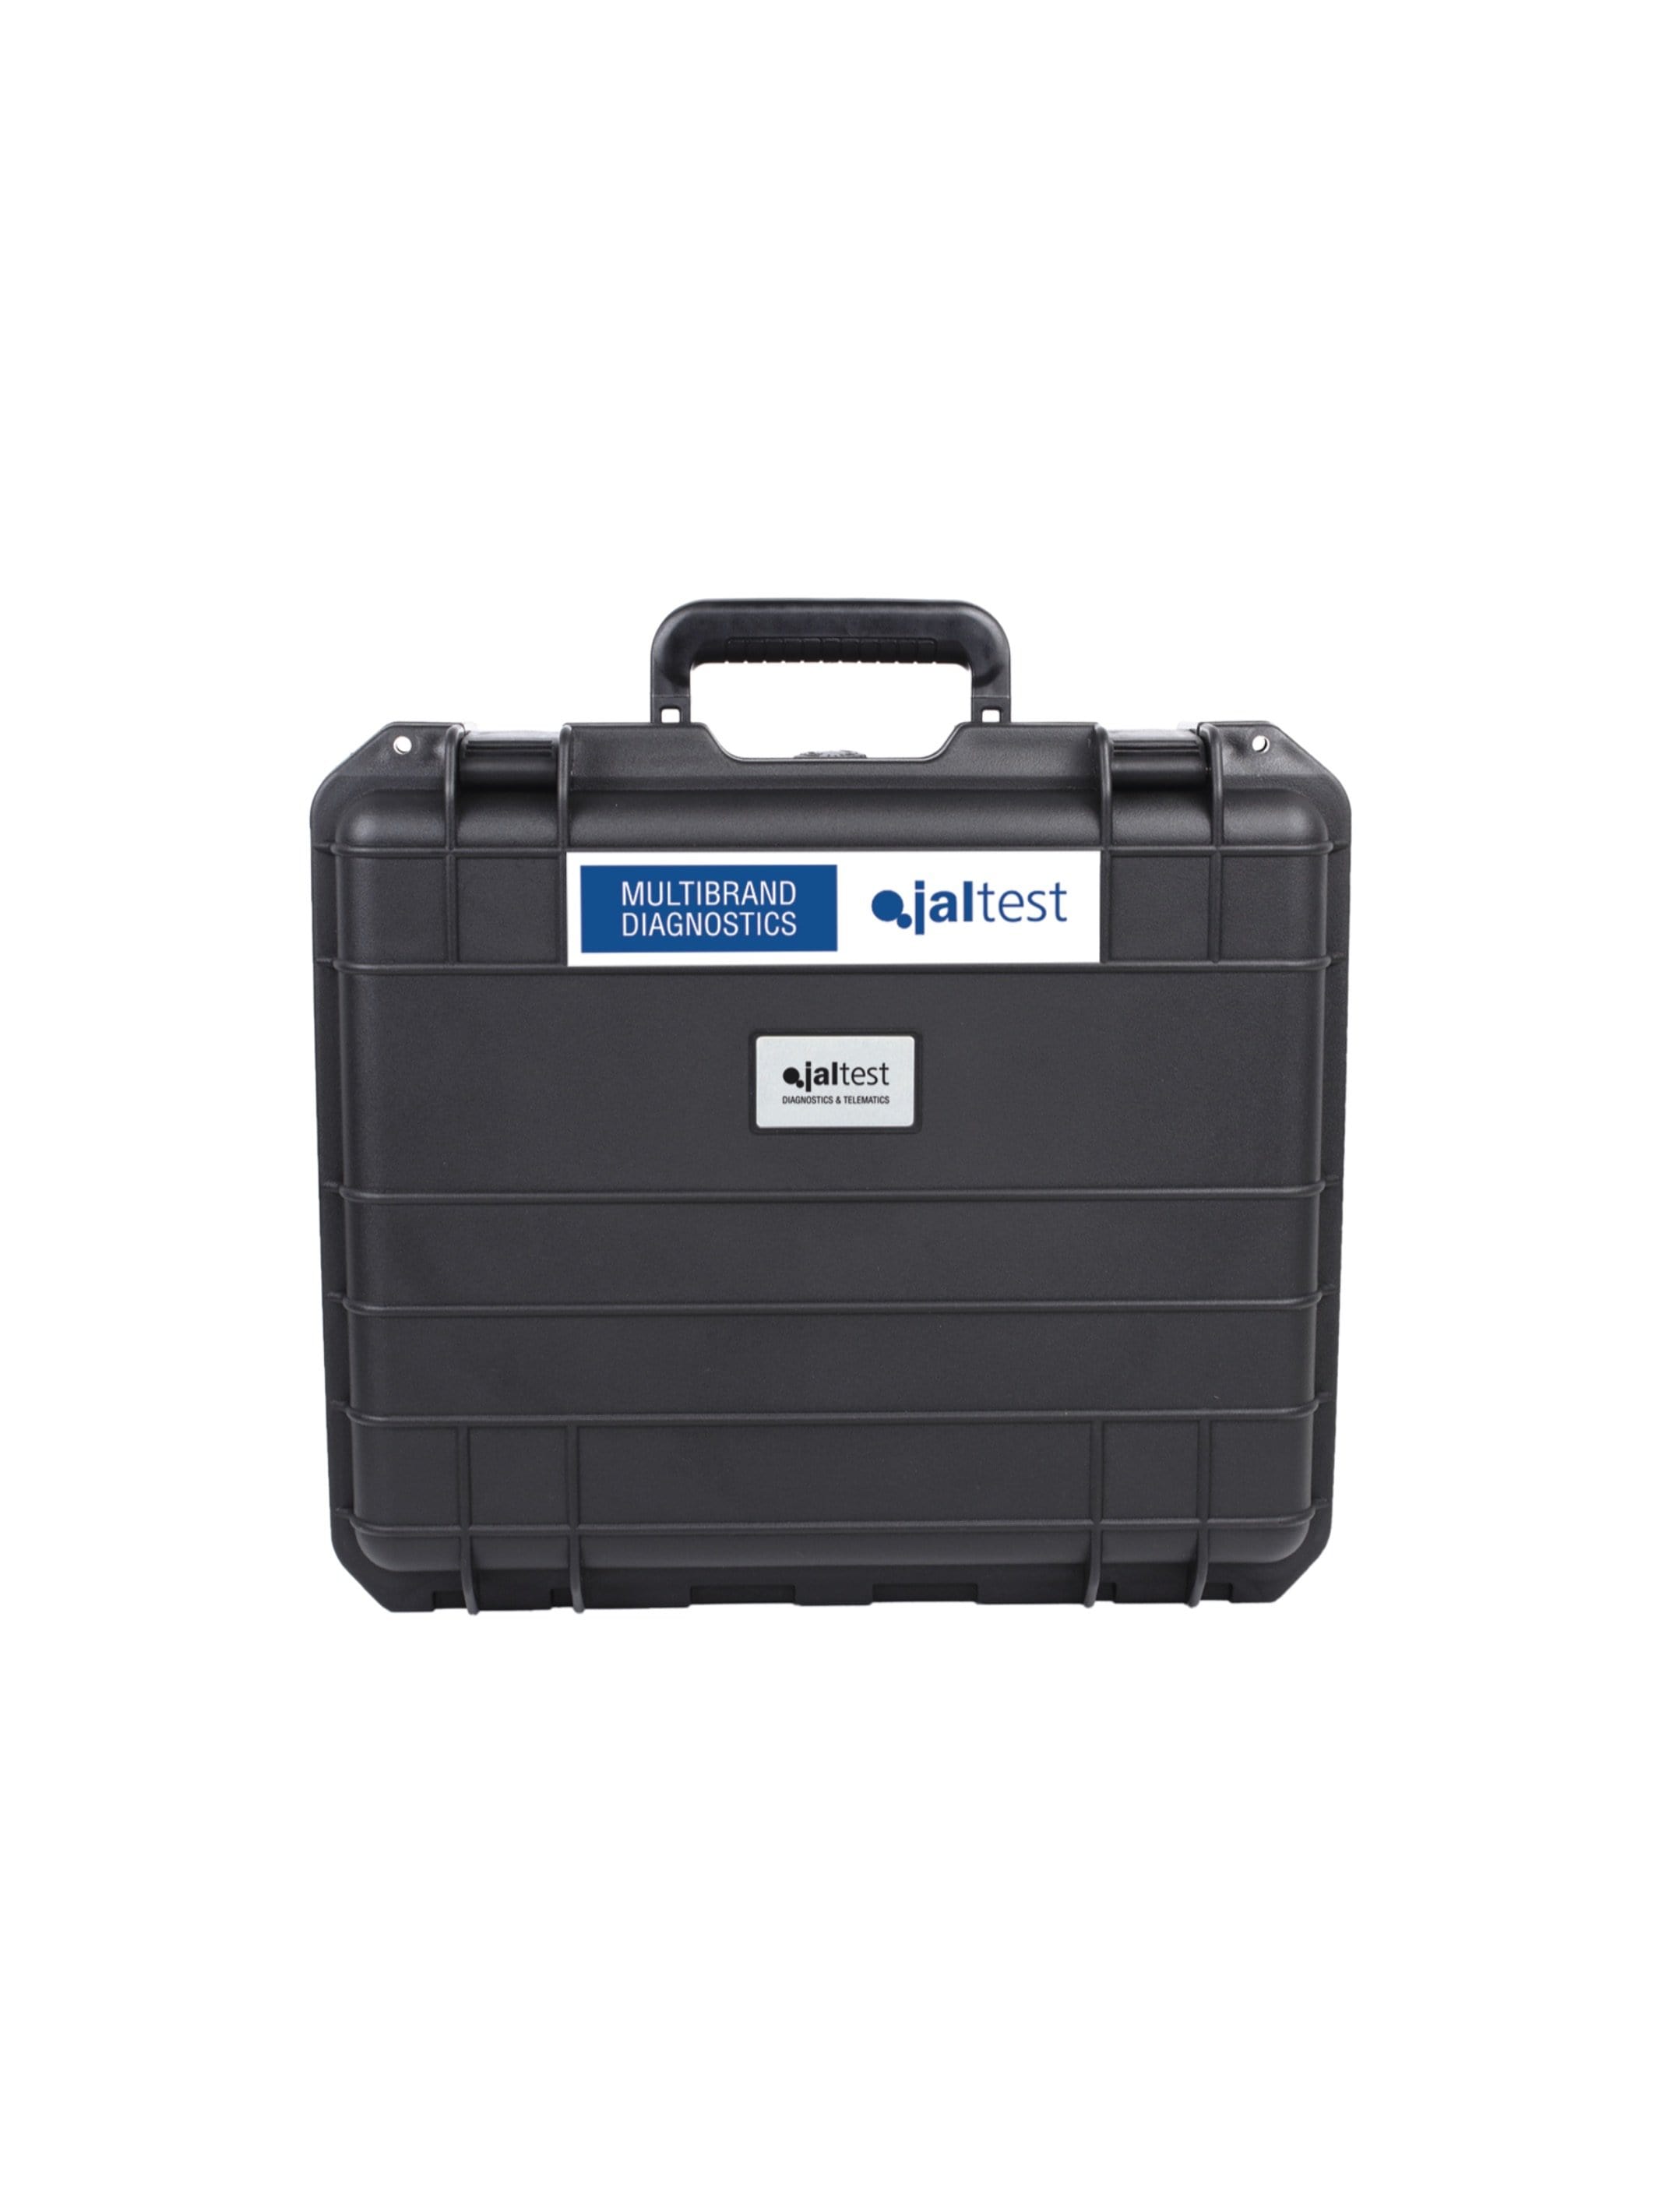 70003015 Transport Hardcase - Jaltest Diagnostic Computer Kit for Commercial Vehicle, Construction & Agriculture Equipment